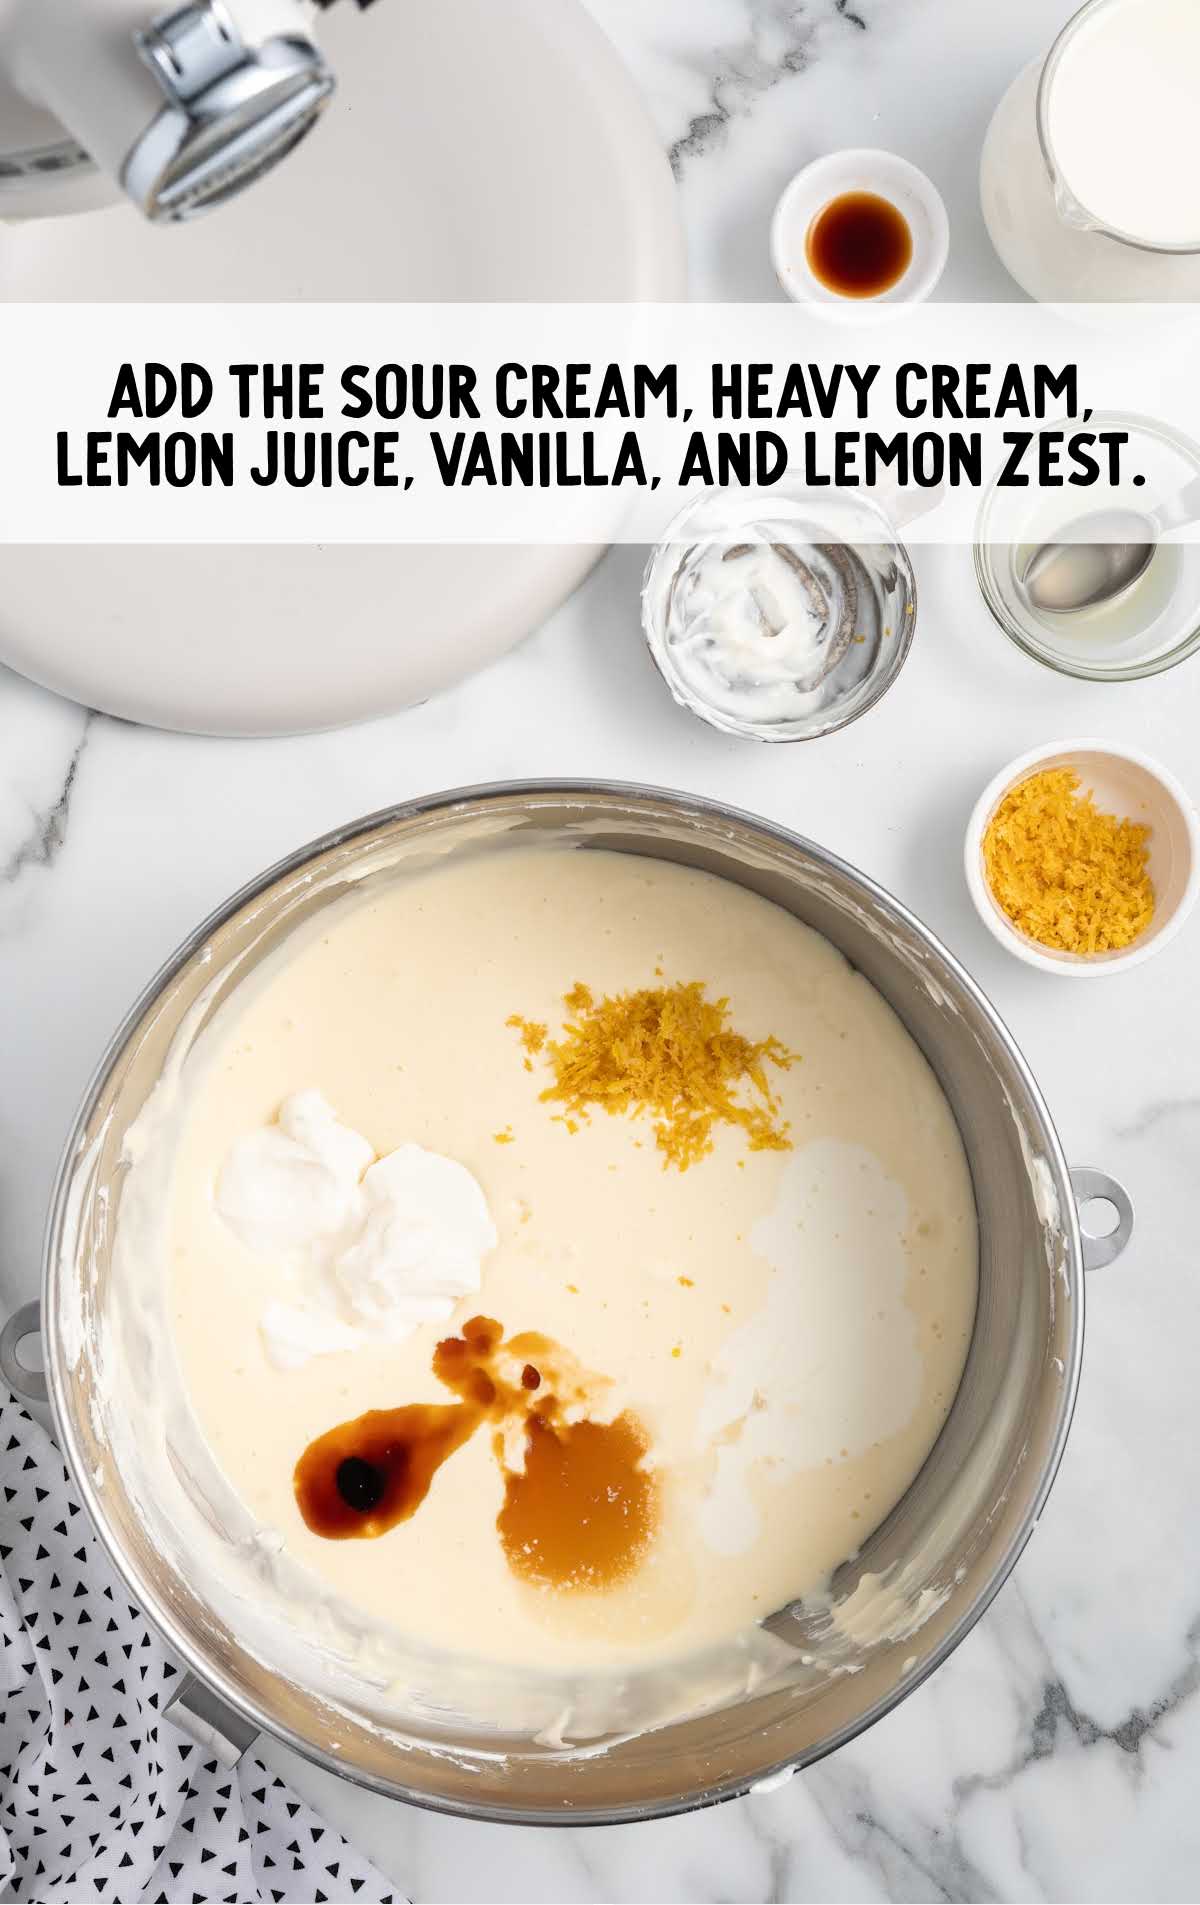 sour cream, heavy cream, lemon juice, vanilla,. and lemon zest added